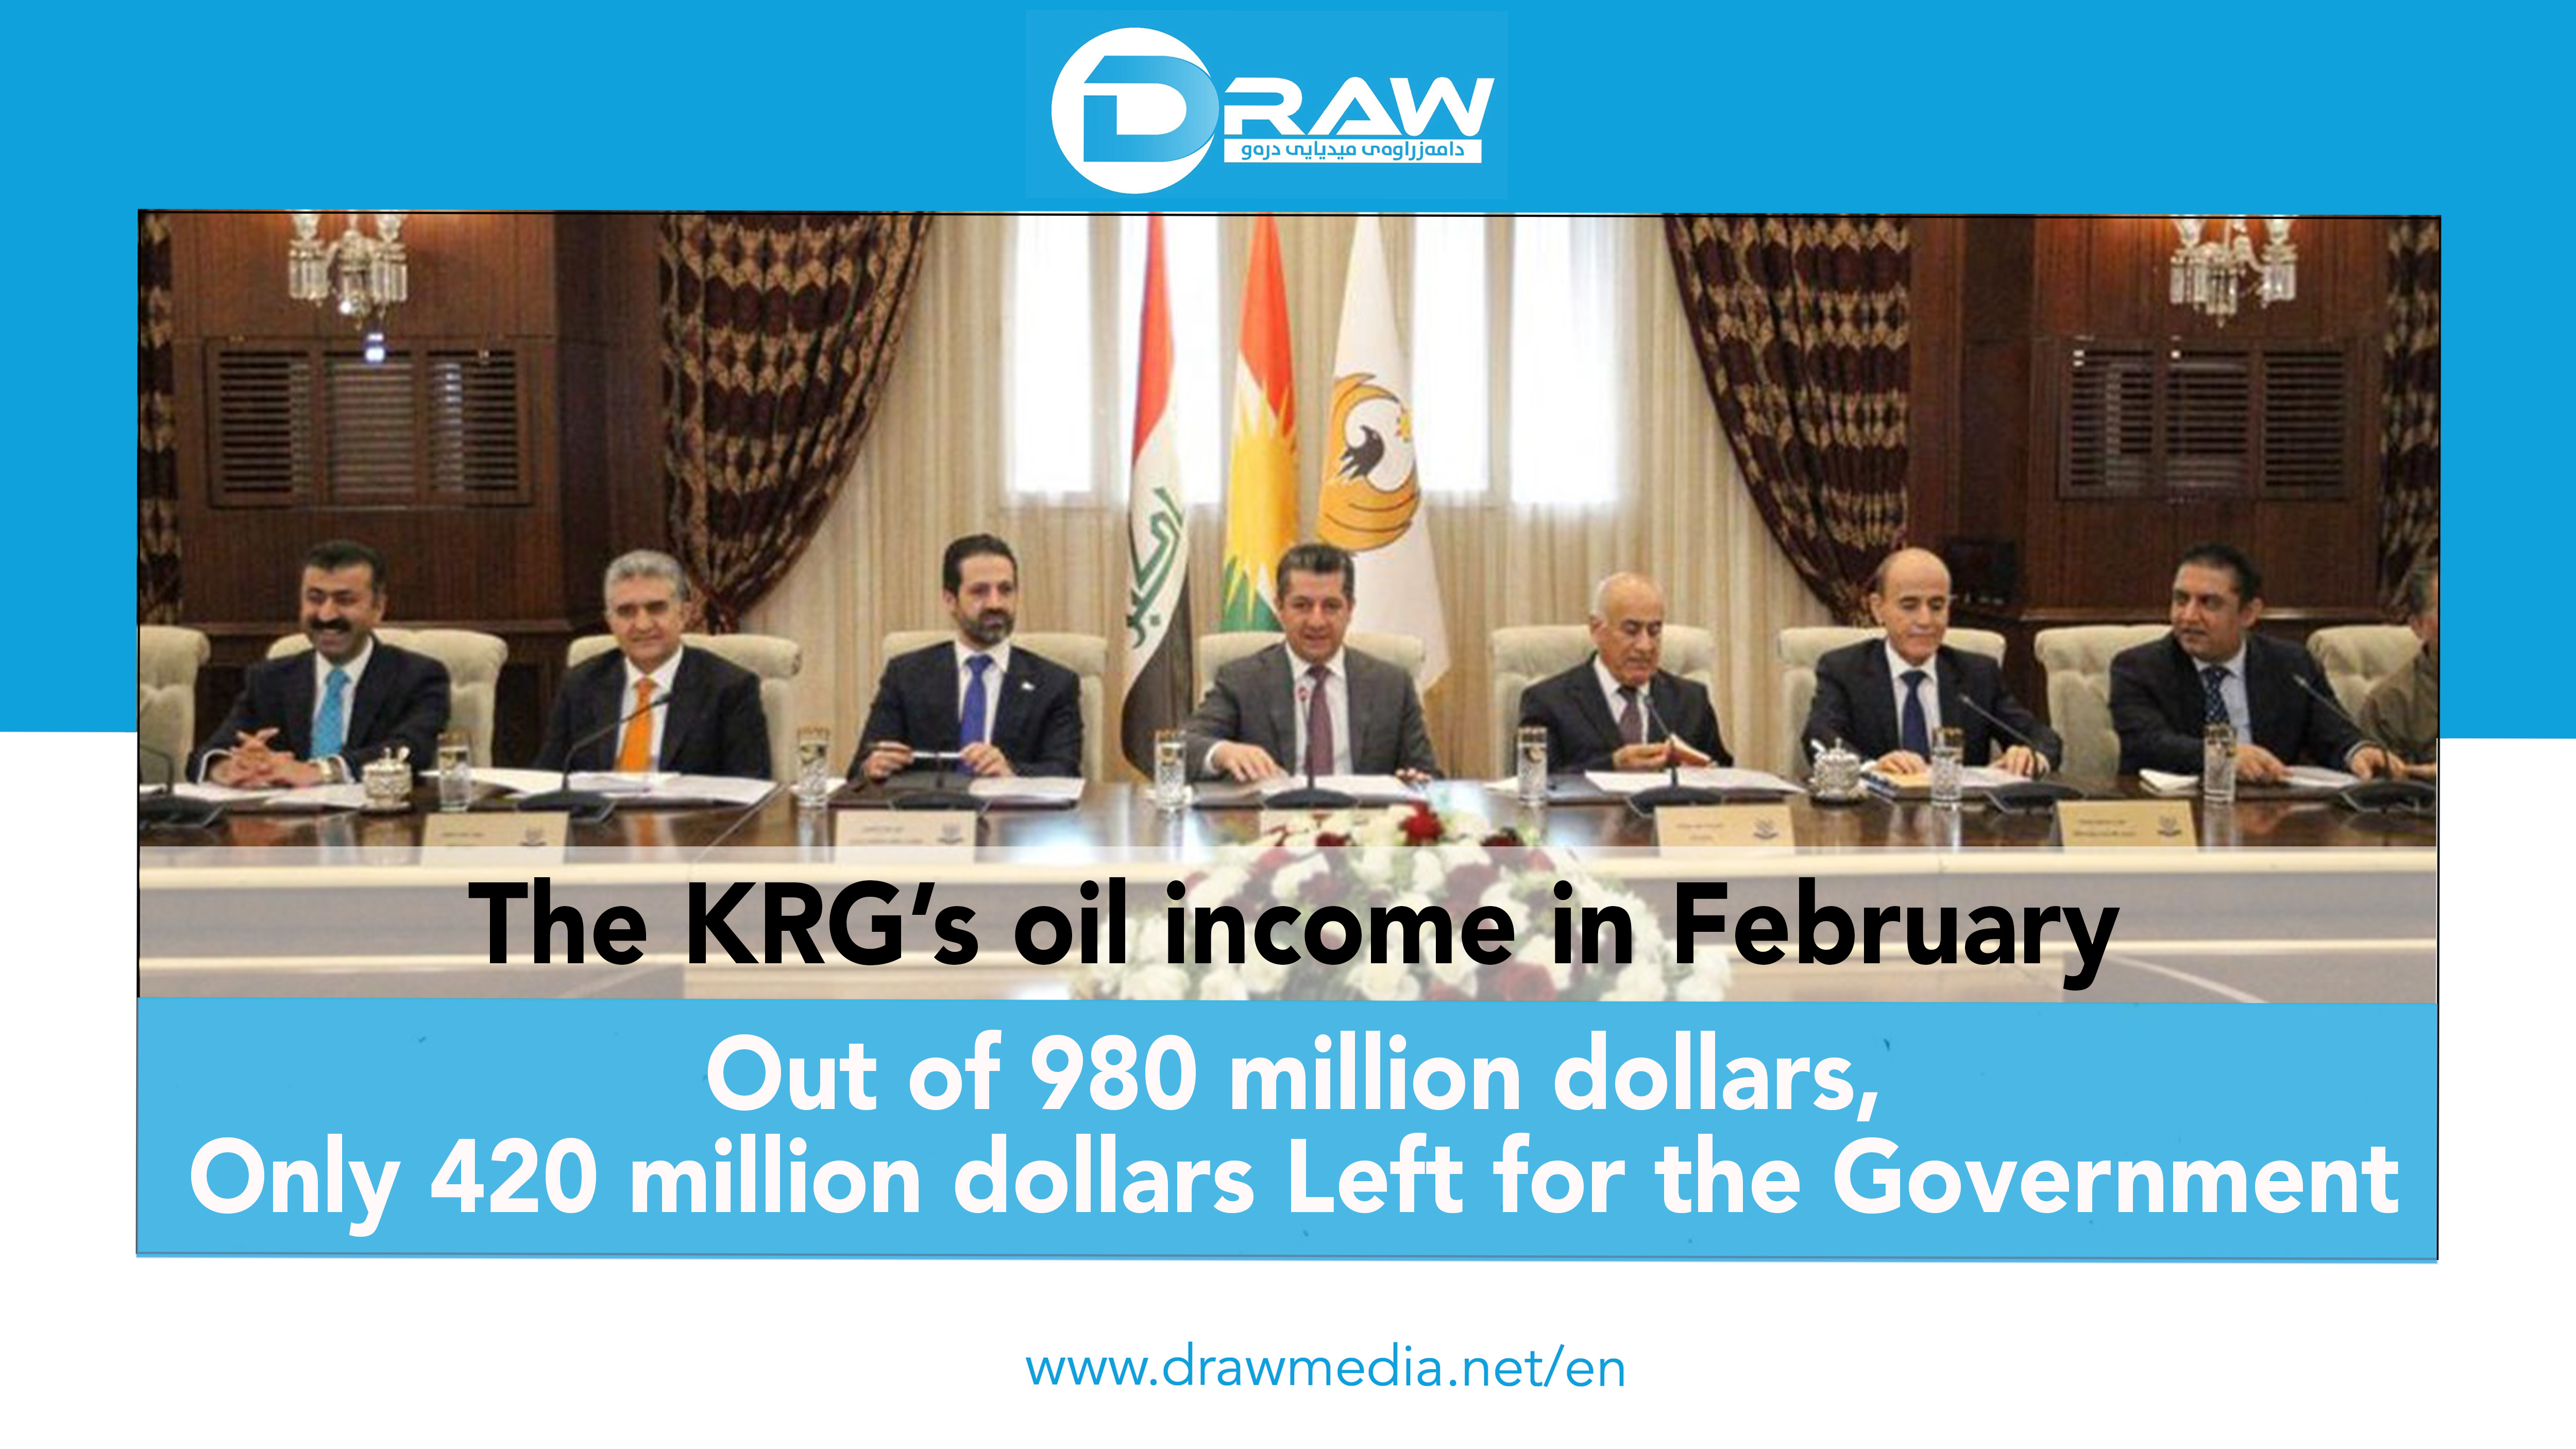 DrawMedia.net / The KRG’s oil income in February